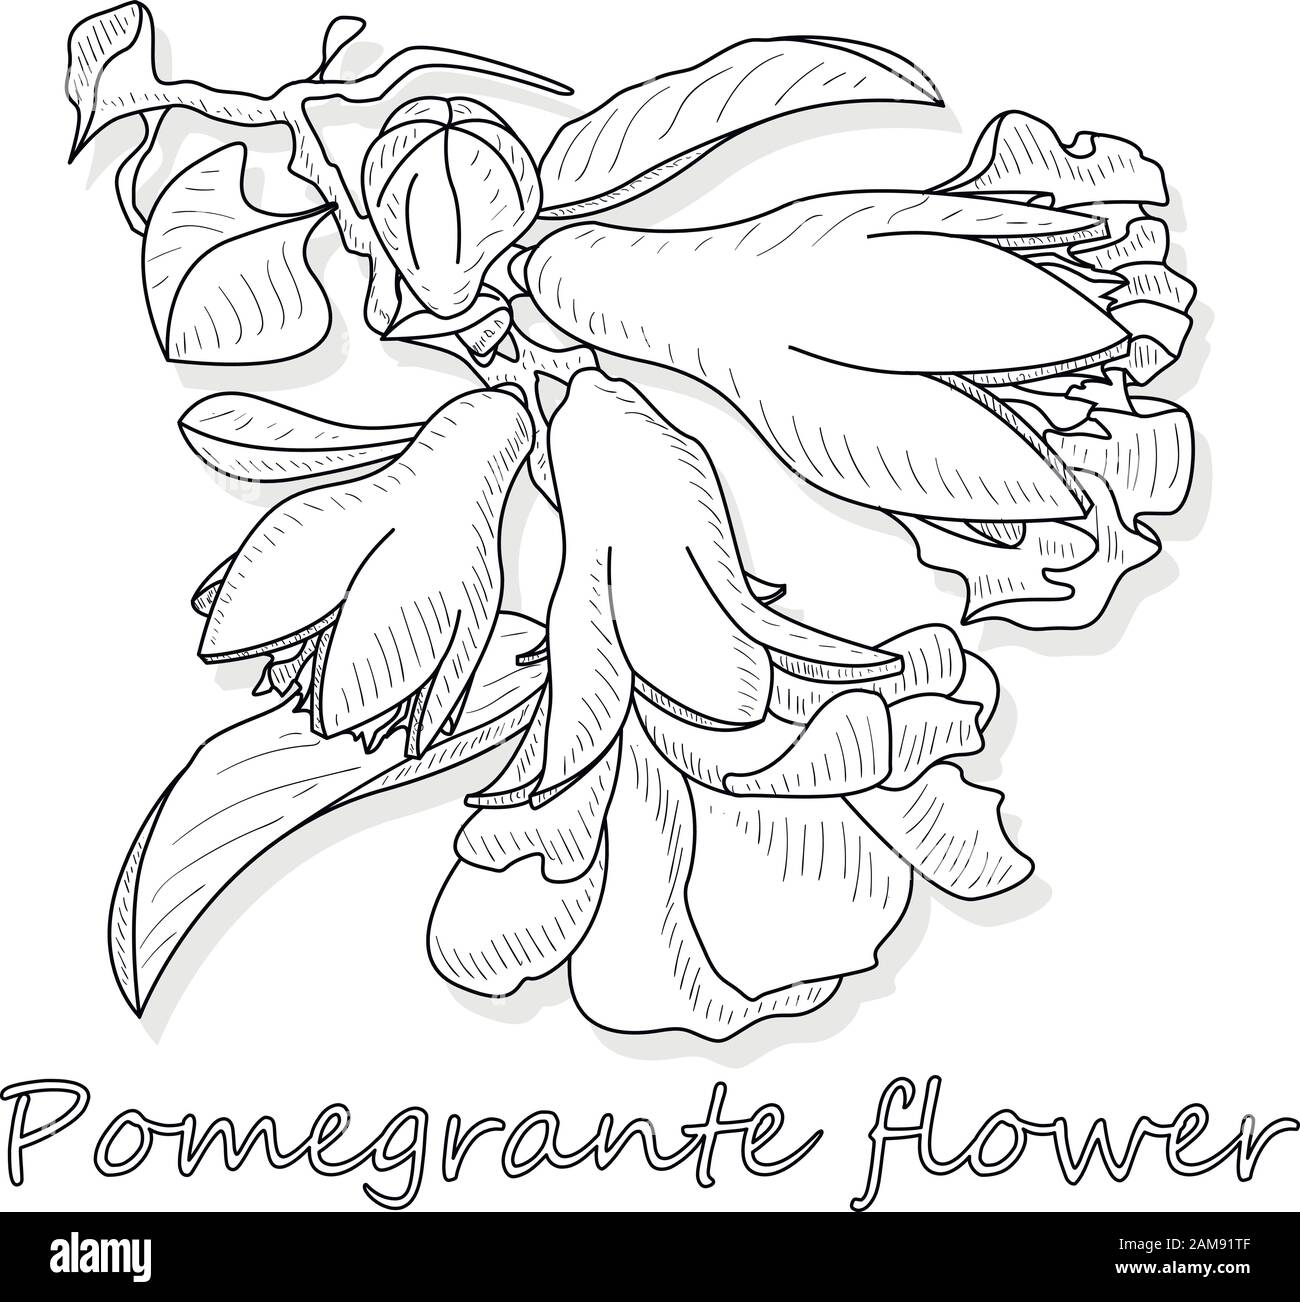 Pomegranate flower hand drown vector illustration isolated on white background. Monochrome. Stock Vector